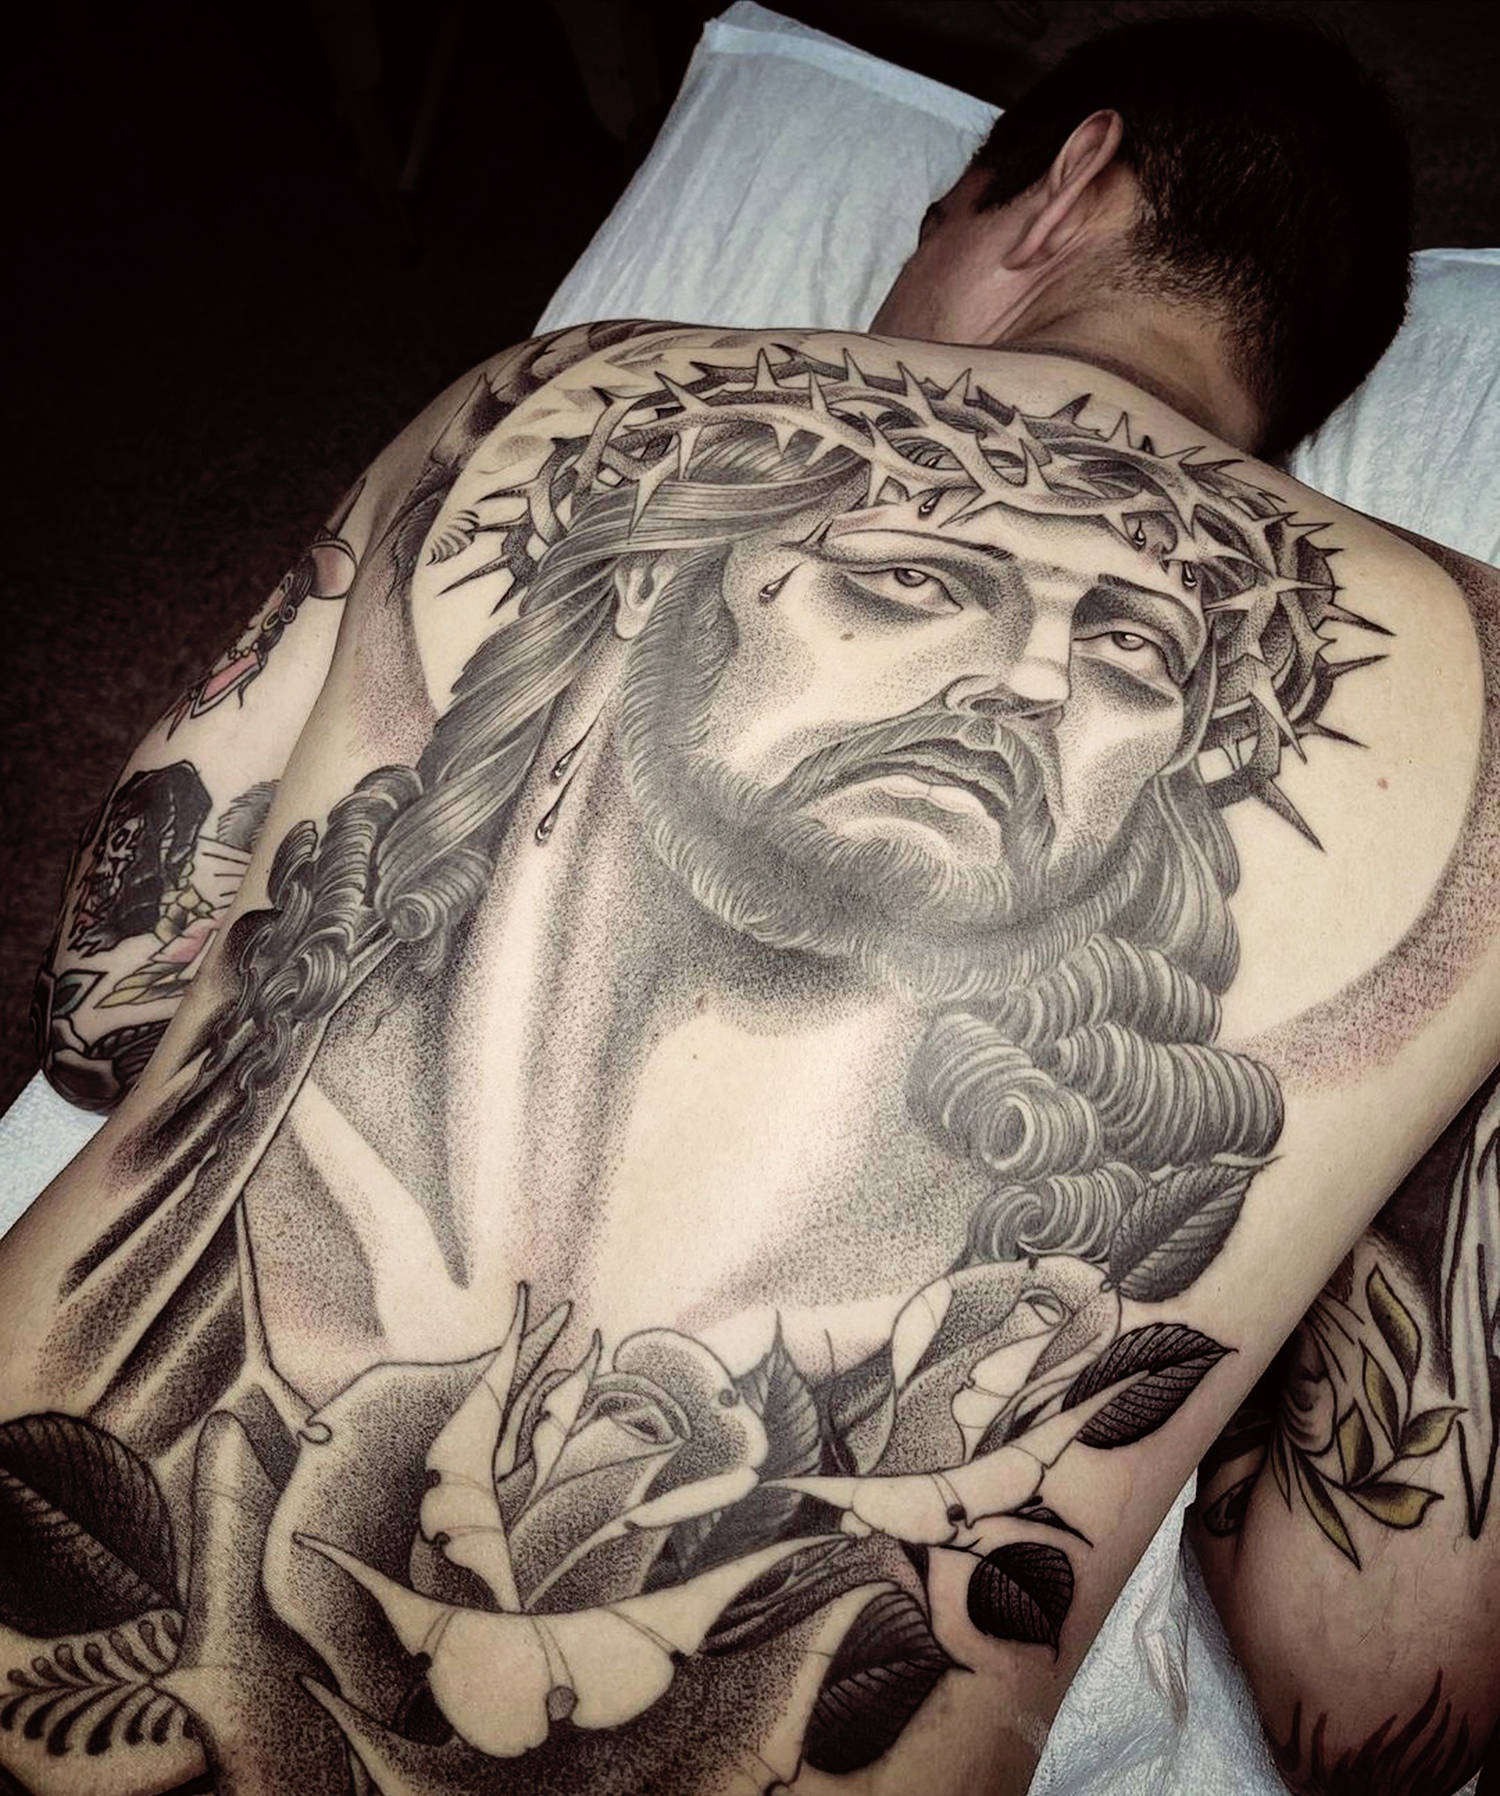 Jesus Christ back tattoo is all glory and majesty